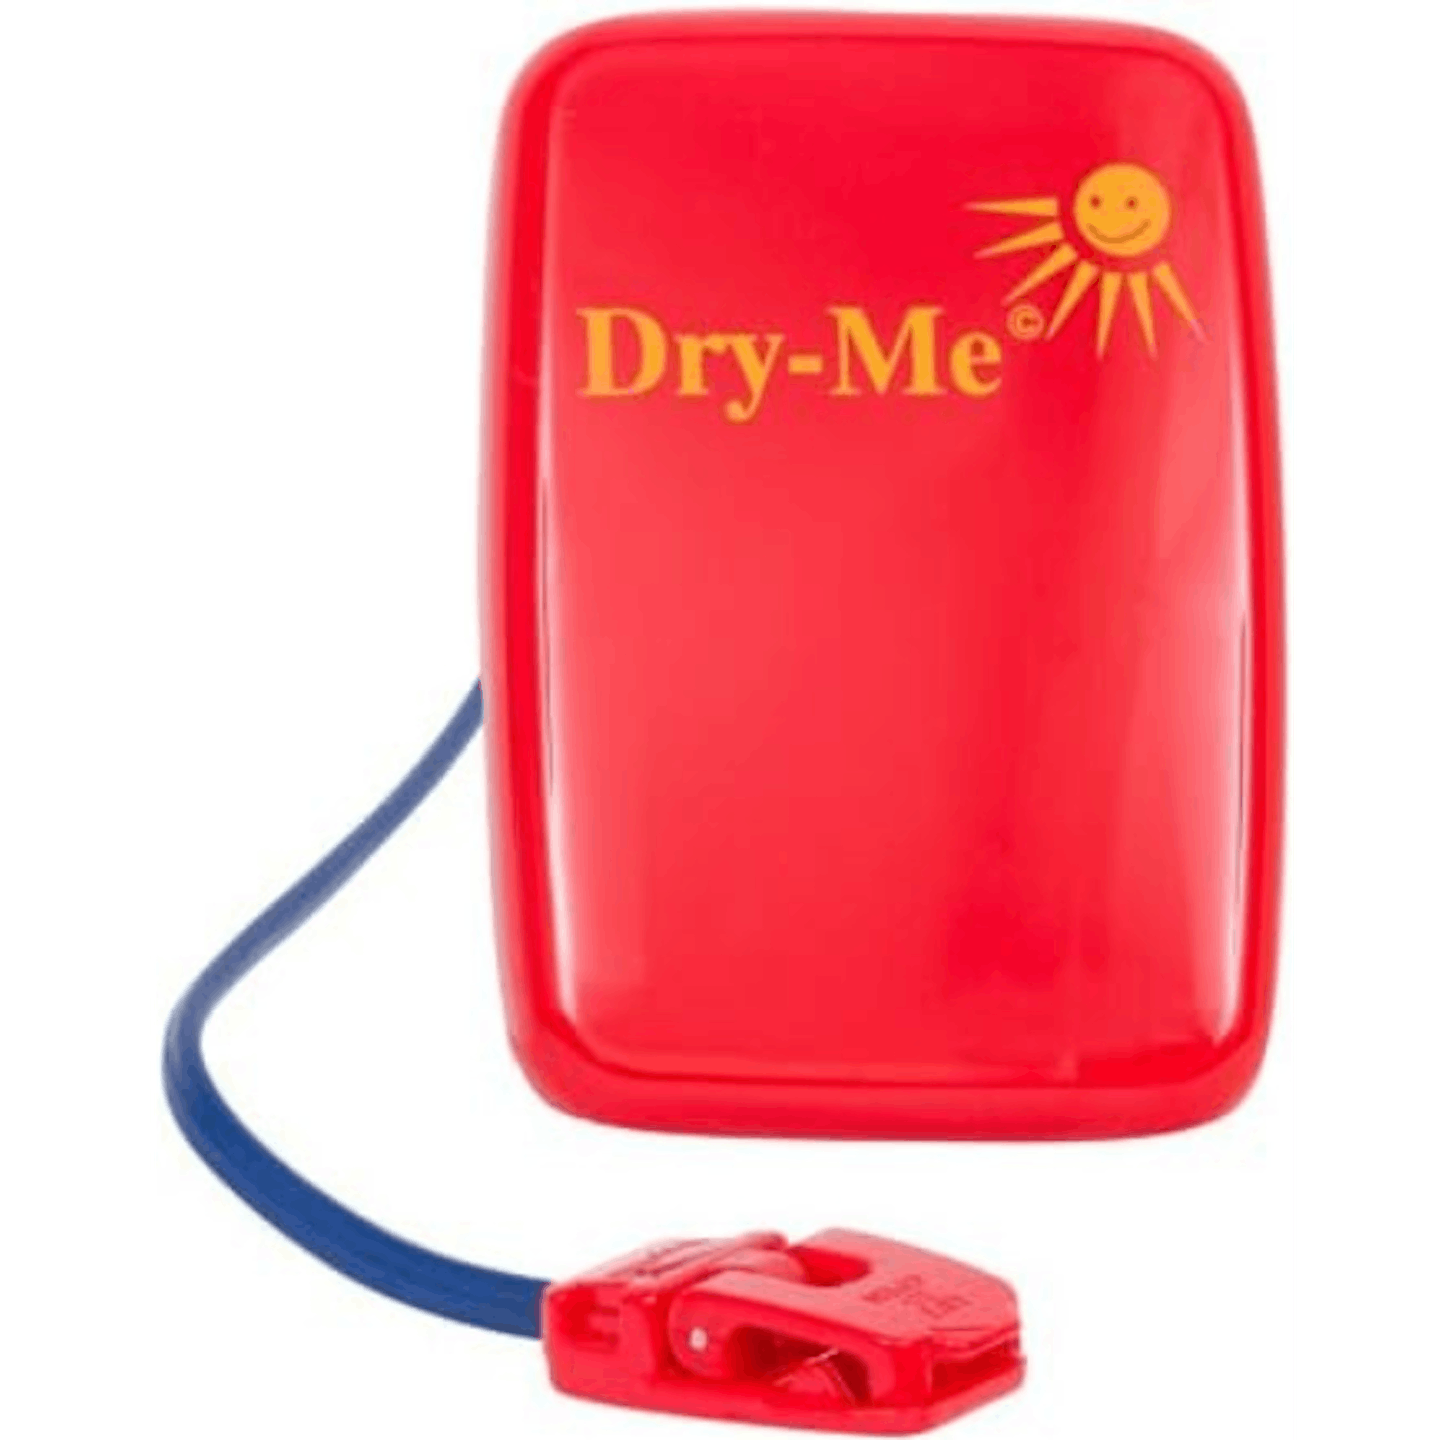 Dry-me bedwetting alarm